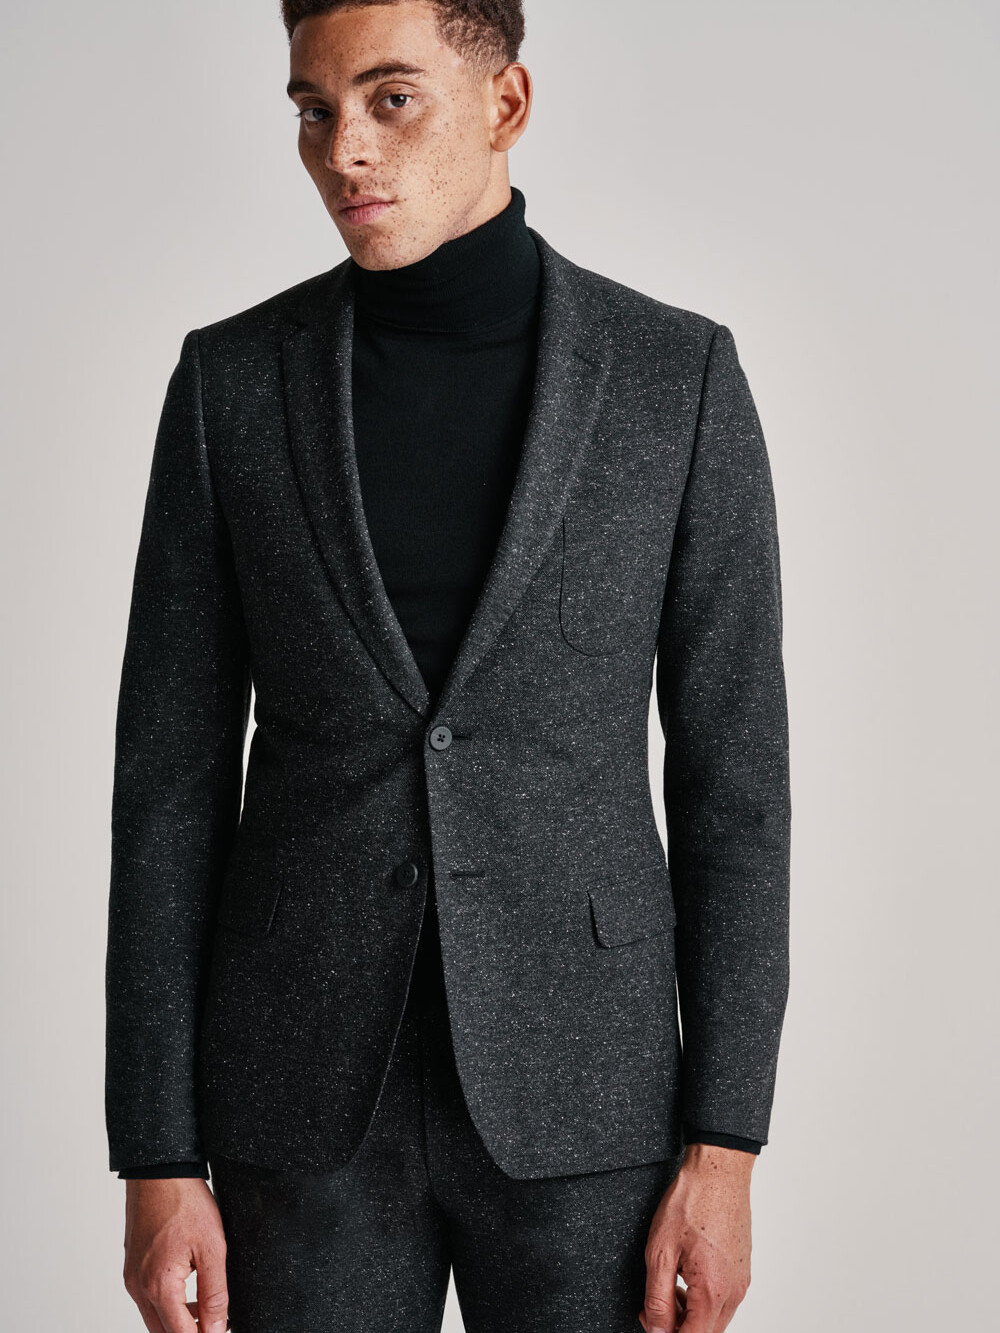 CC25 Dark Grey Donegal Tweed Suit - Tough Love | Café Costume